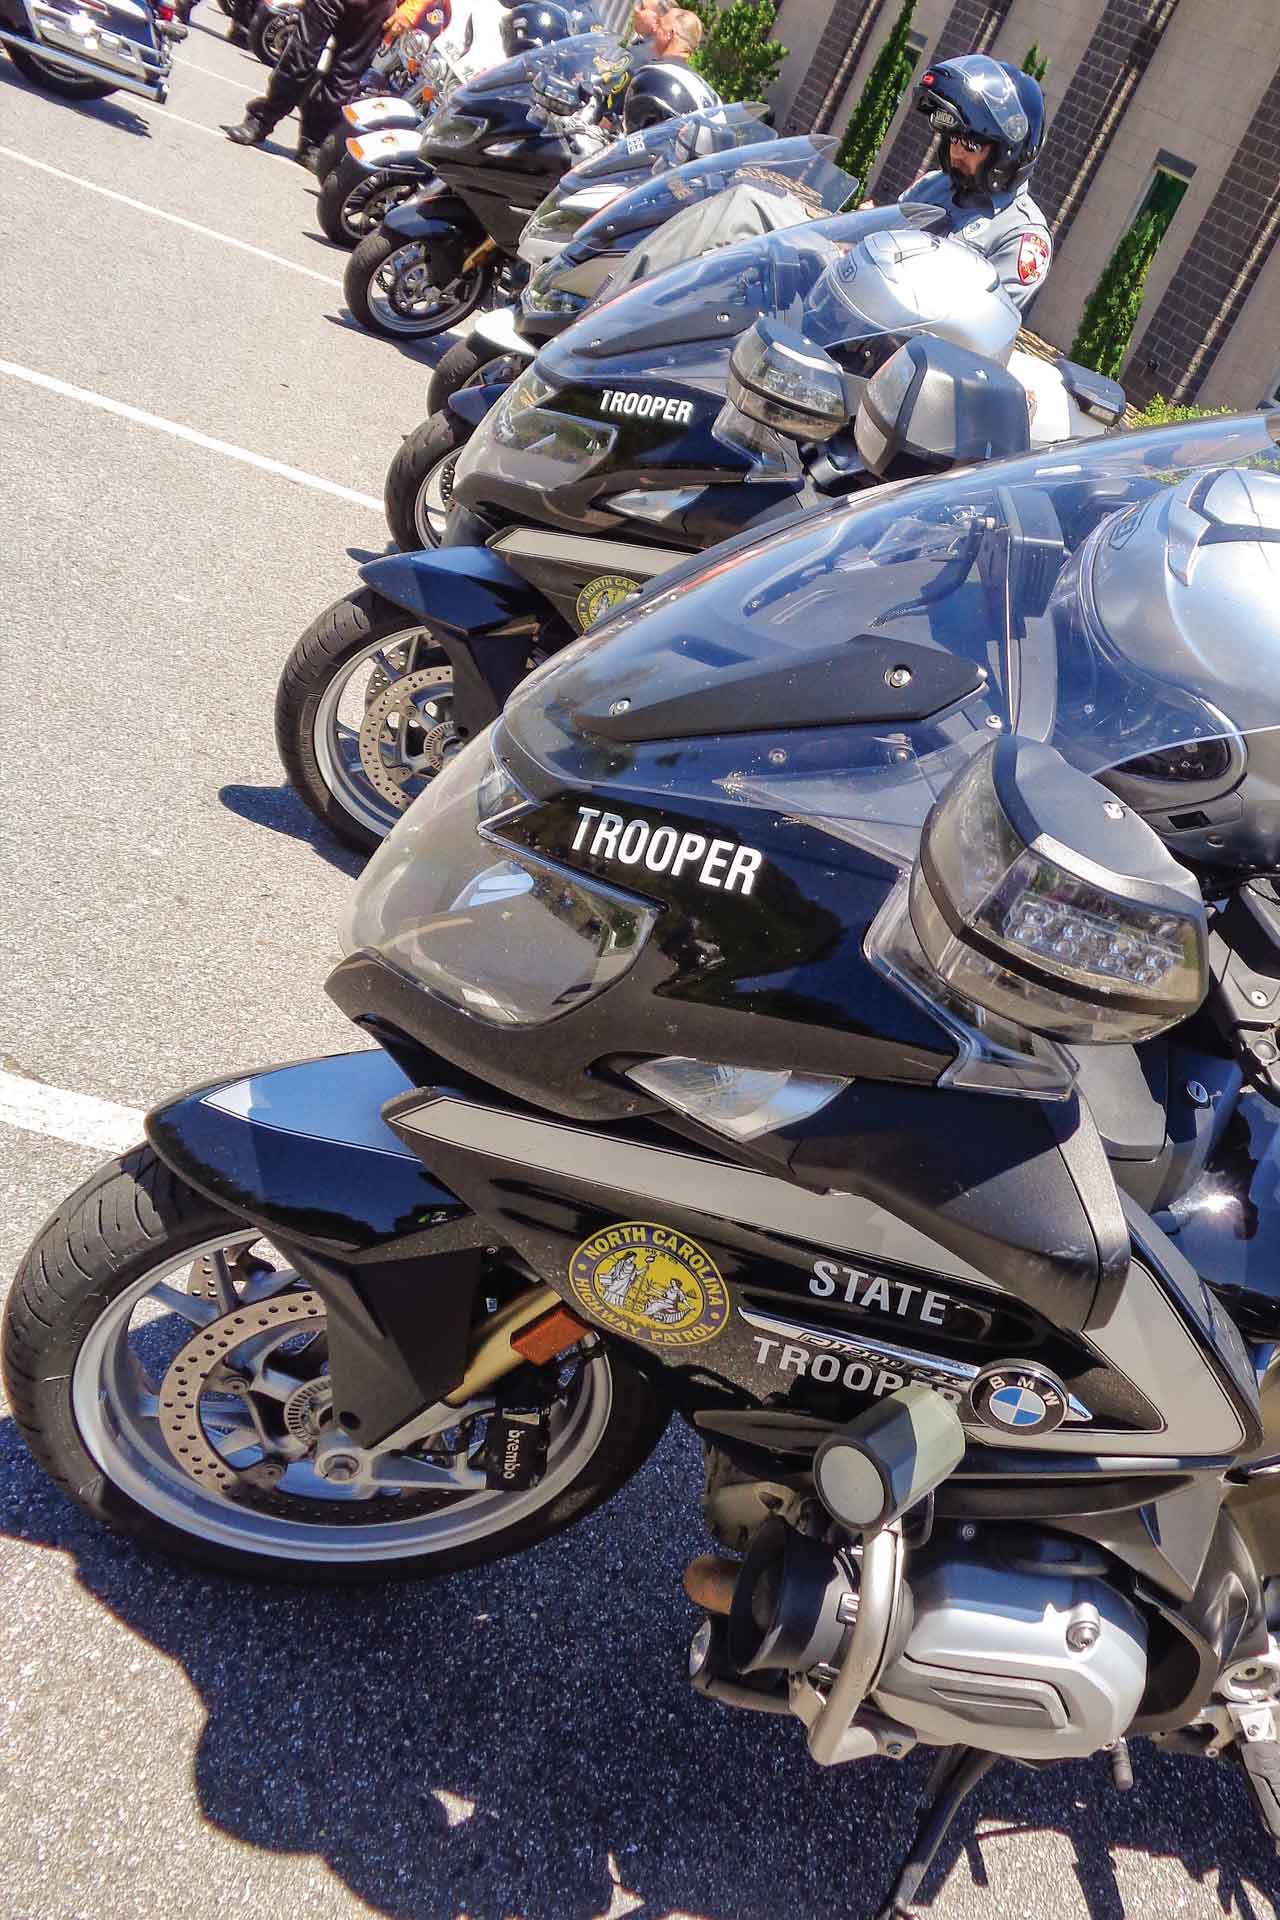 A lineup of North Carolina State Patrol BMW motorcycles